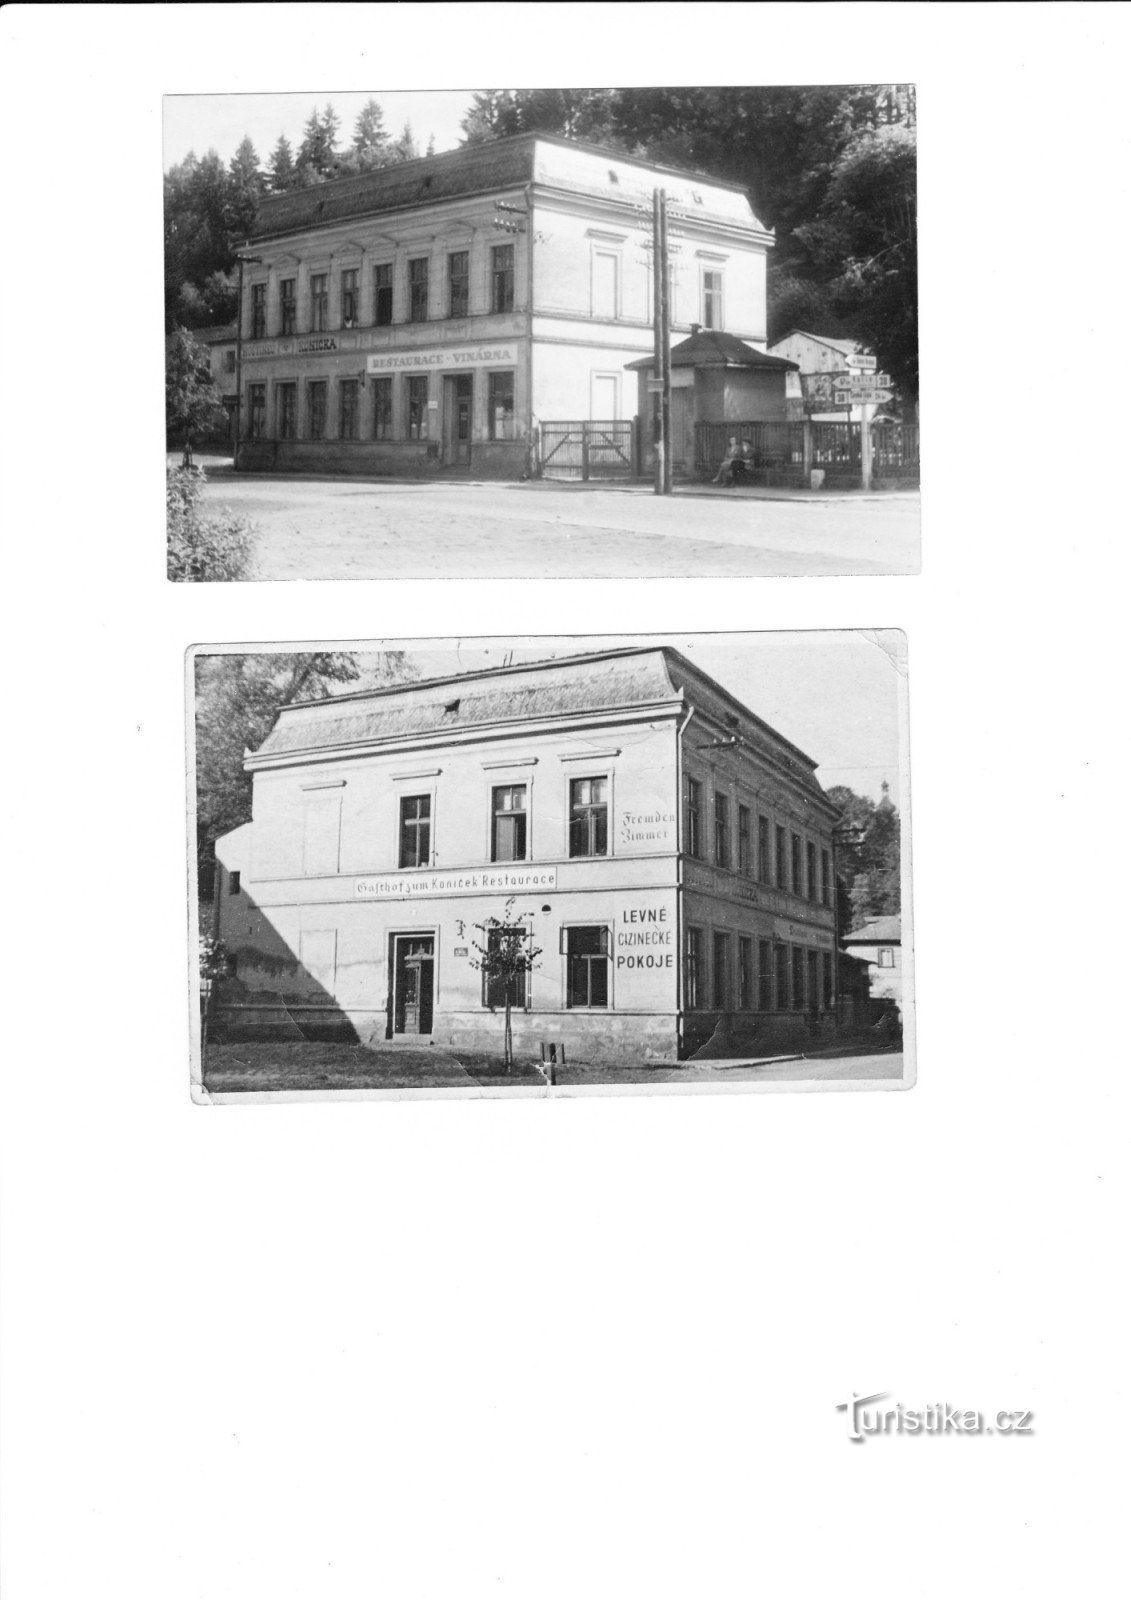 l'hôtel d'origine Koníček - la propriété du grand-père de M. Šenekl